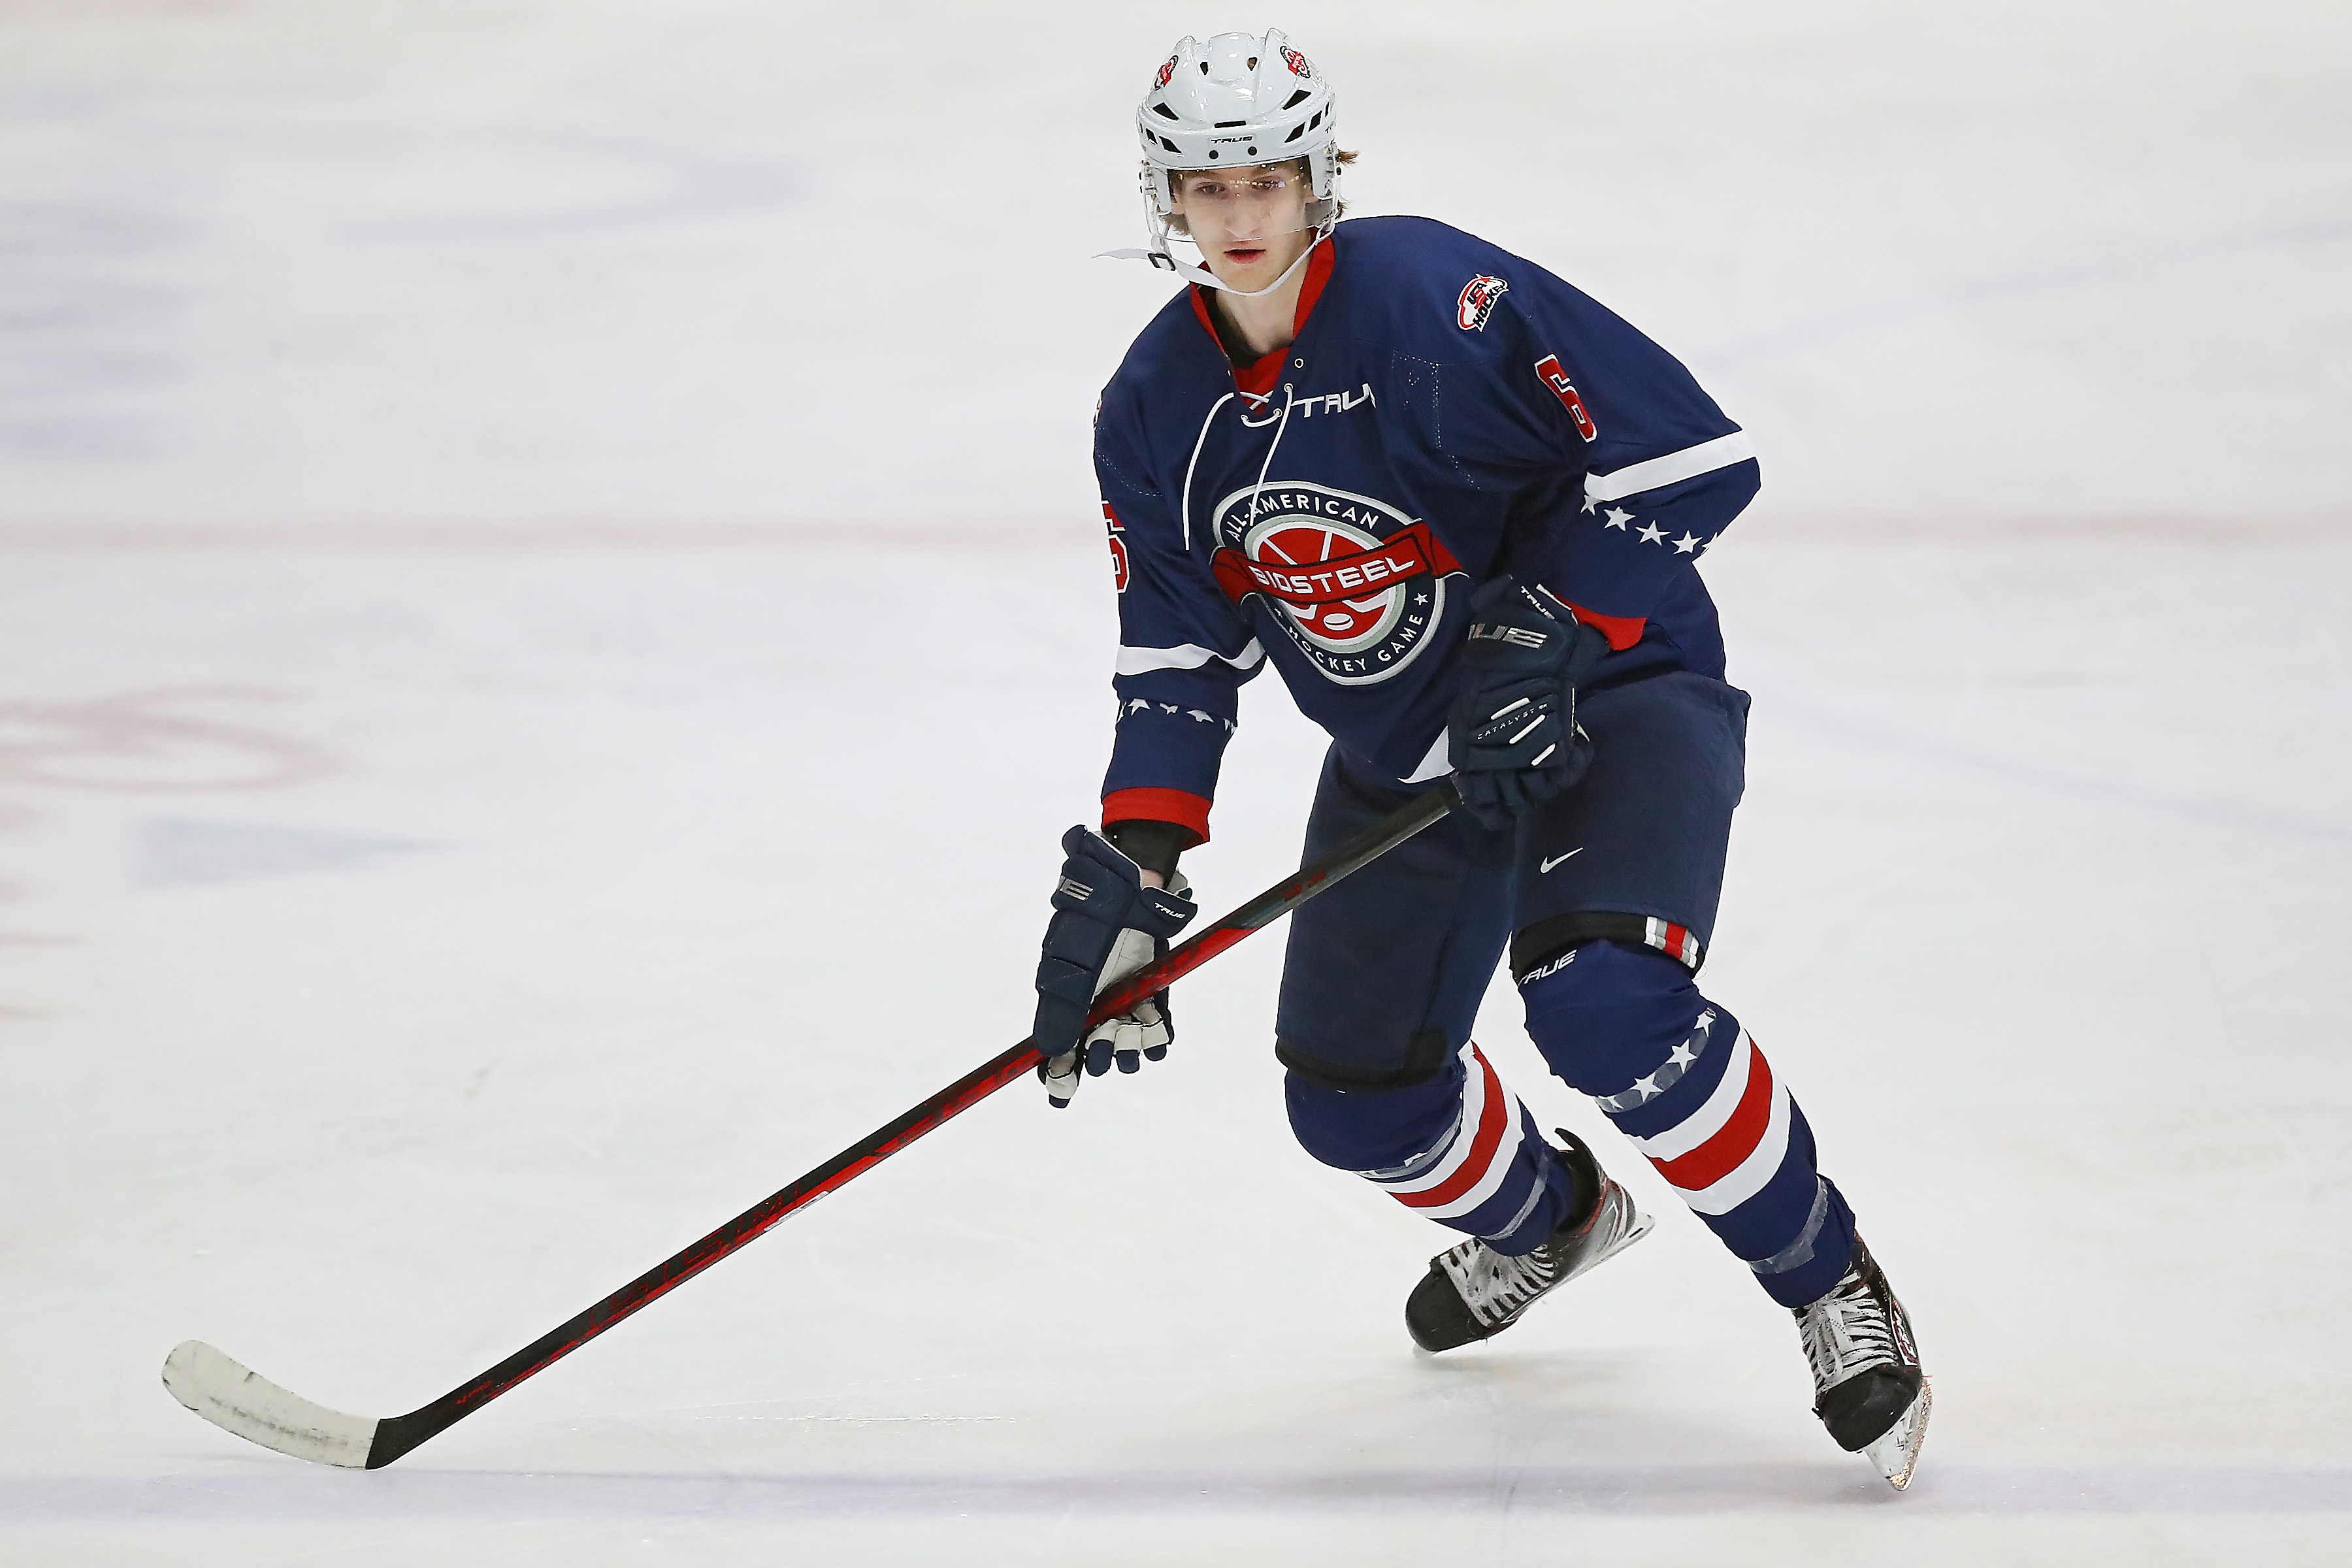 Team North America dominates Finland at World Cup of Hockey - ESPN